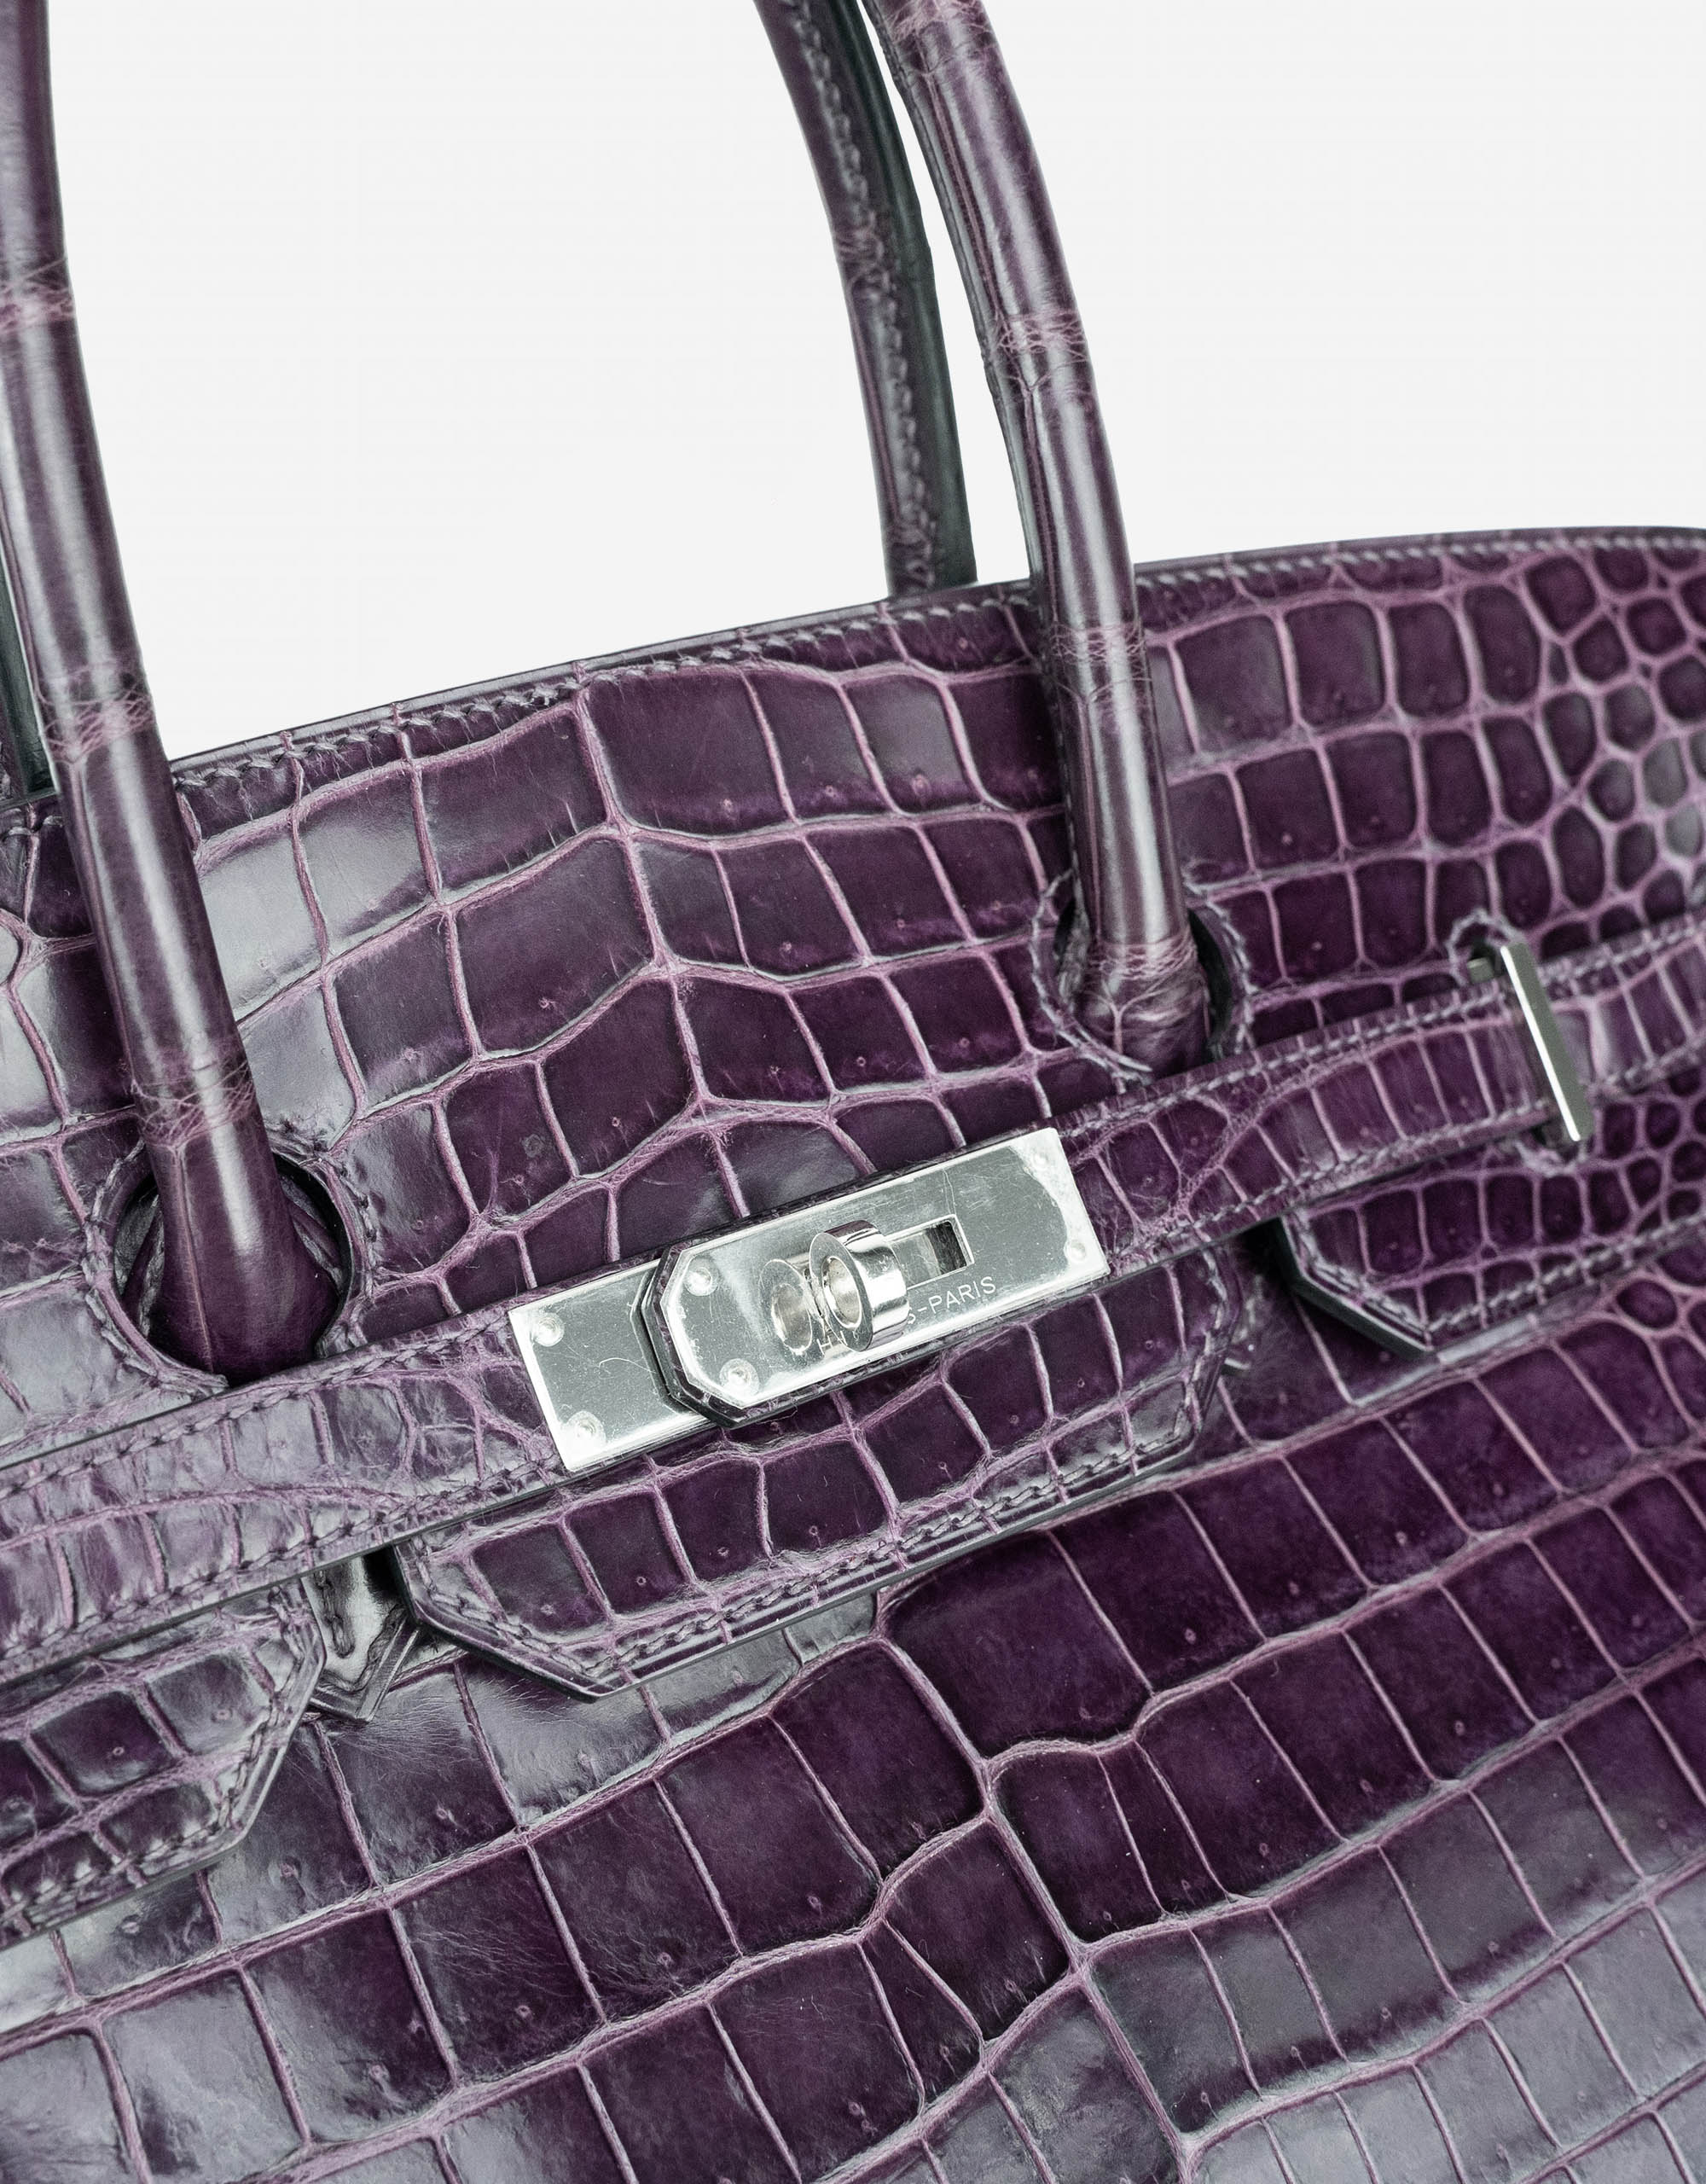 Hermes Amethyst Purple Crocodile Birkin 35 Bag For Sale at 1stDibs